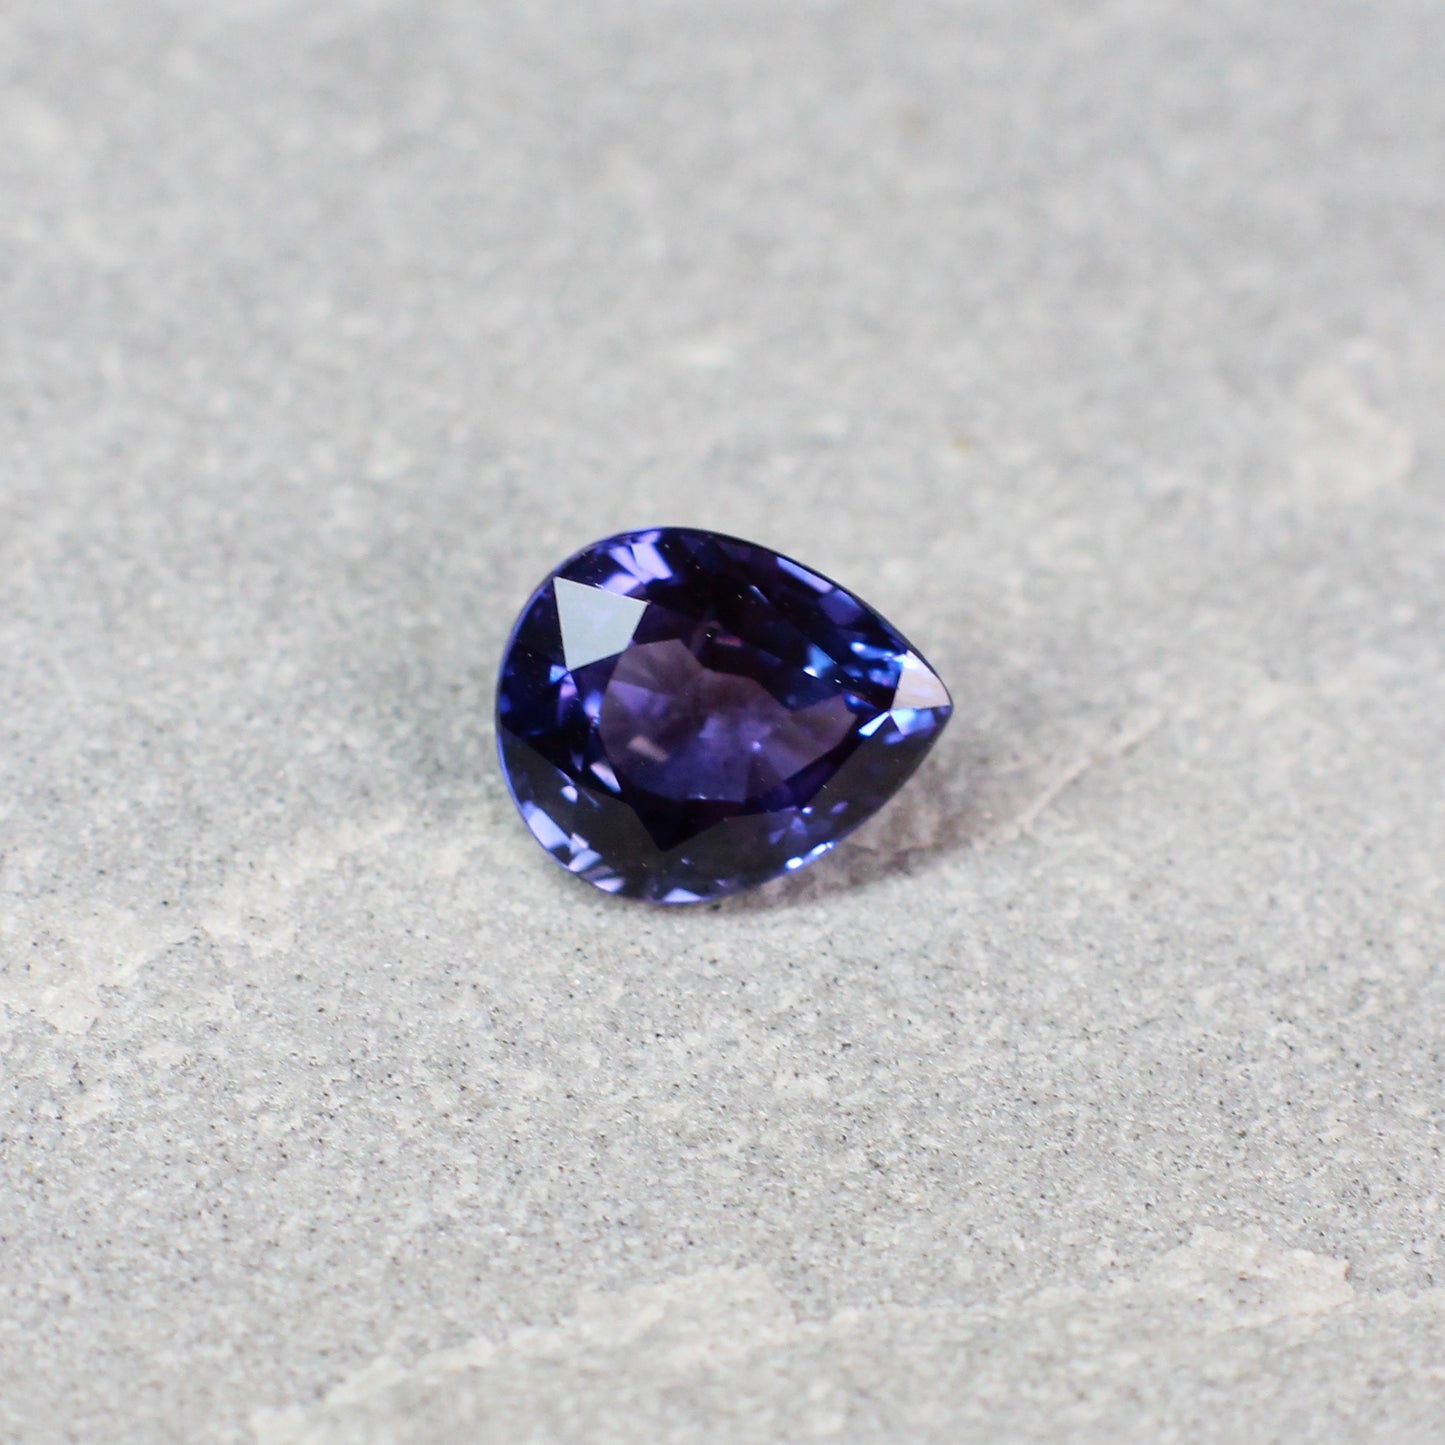 1.89ct Violetish Blue / Purple, Pear Shape Colour Change Sapphire, Heated, Sri Lanka - 8.08 x 6.67 x 4.18mm